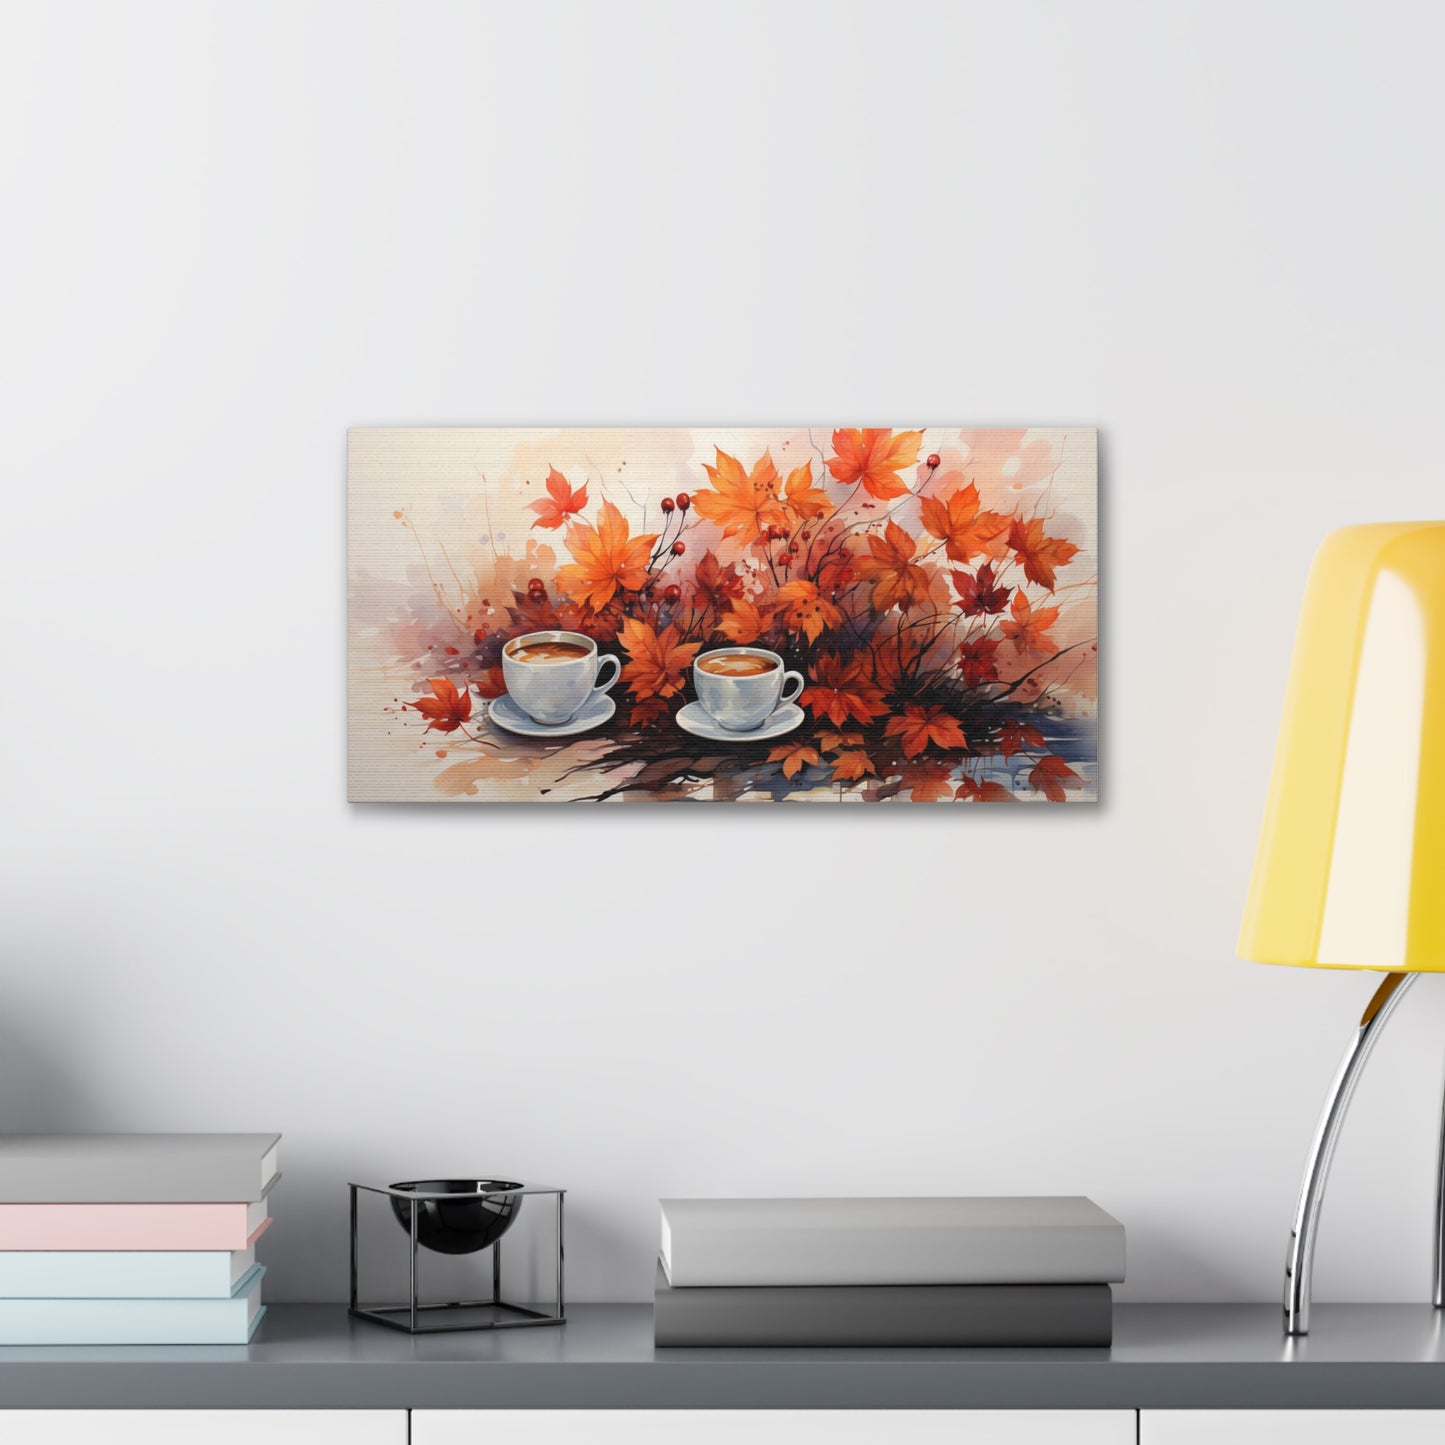 Café Deuce | Autumn Coffee Wall Art Canvas | Rustic Fall Print | Watercolor Wall Art | Fall Decor